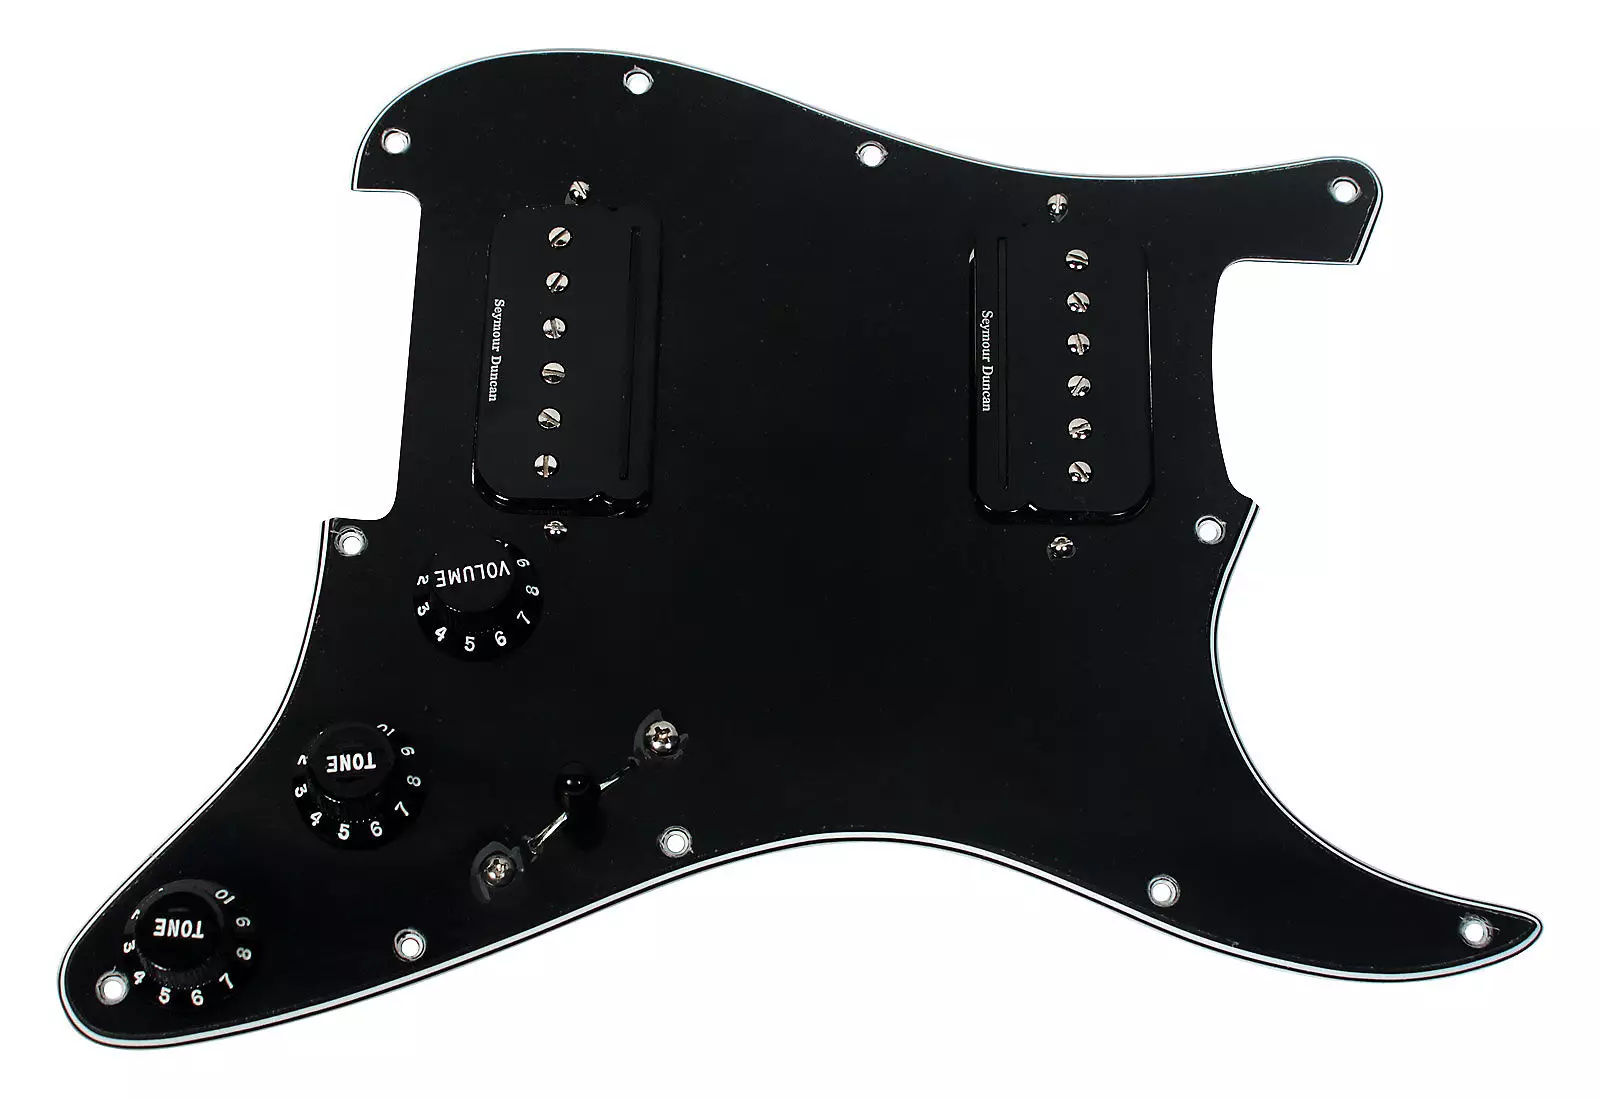 Picgard: עבור Stratocaster גיטרה אקוסטית, עבור מסך הטלוויזיה. מה זה ומה פלסטיק לעשות לוחות עבור גיטרה חשמלית? 25429_4